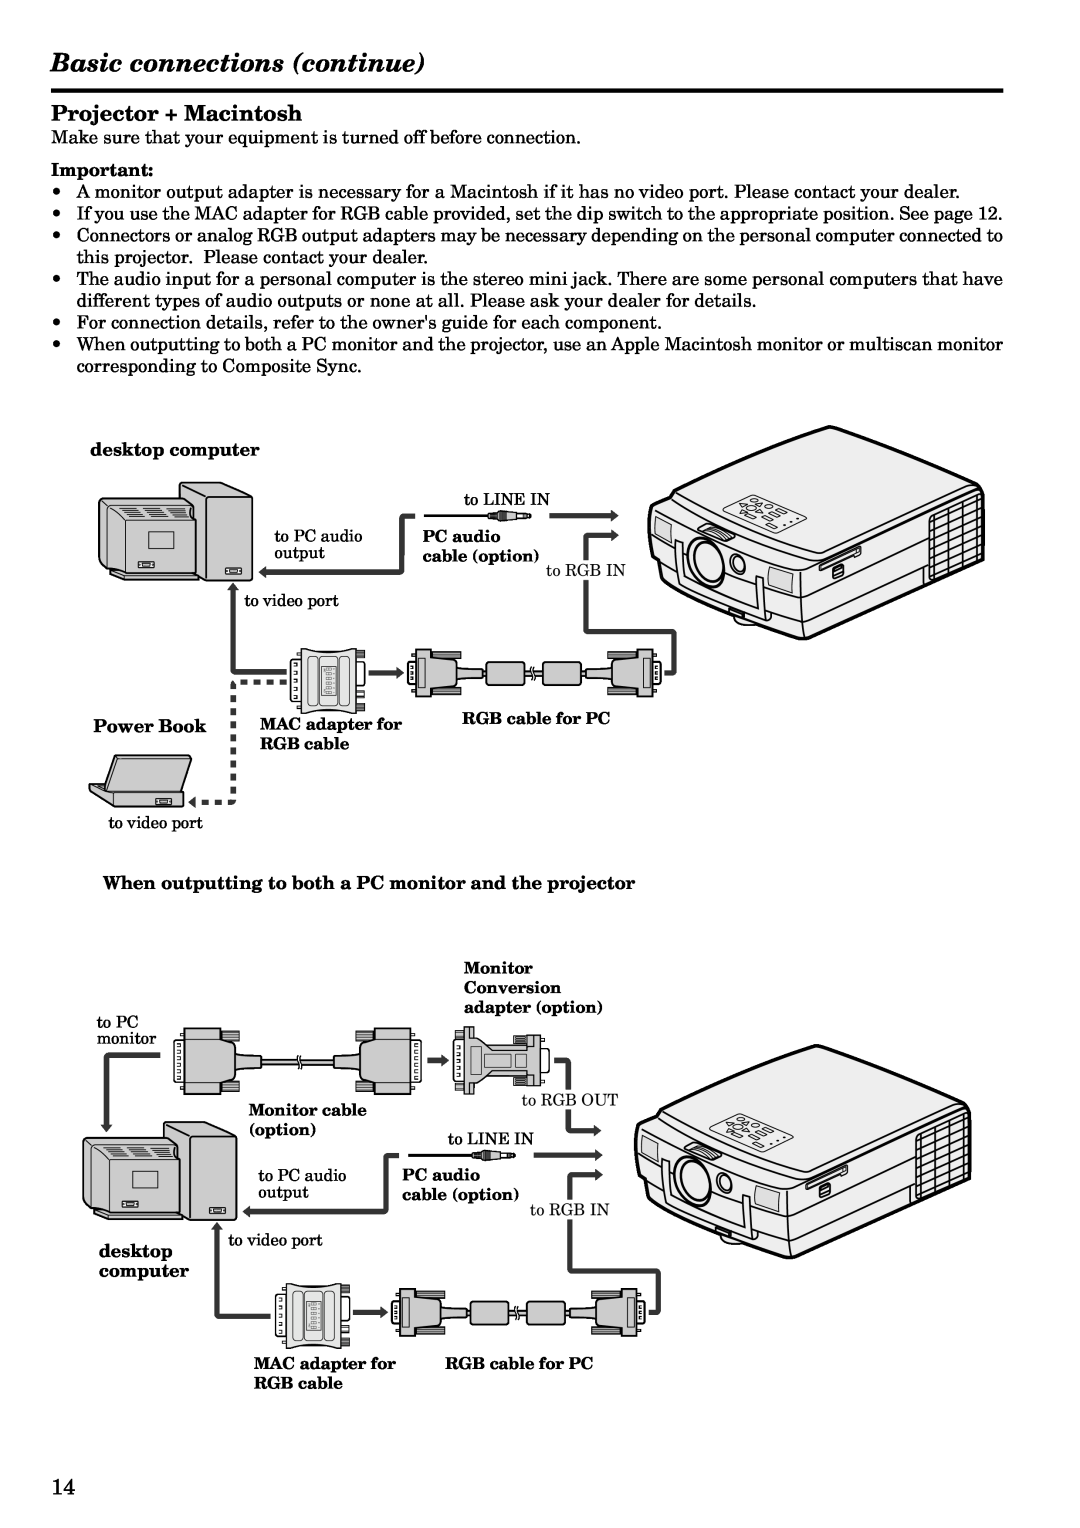 Mitsubishi Electronics LVP-X120A Basic connections continue, Projector + Macintosh, desktop computer, Power Book 